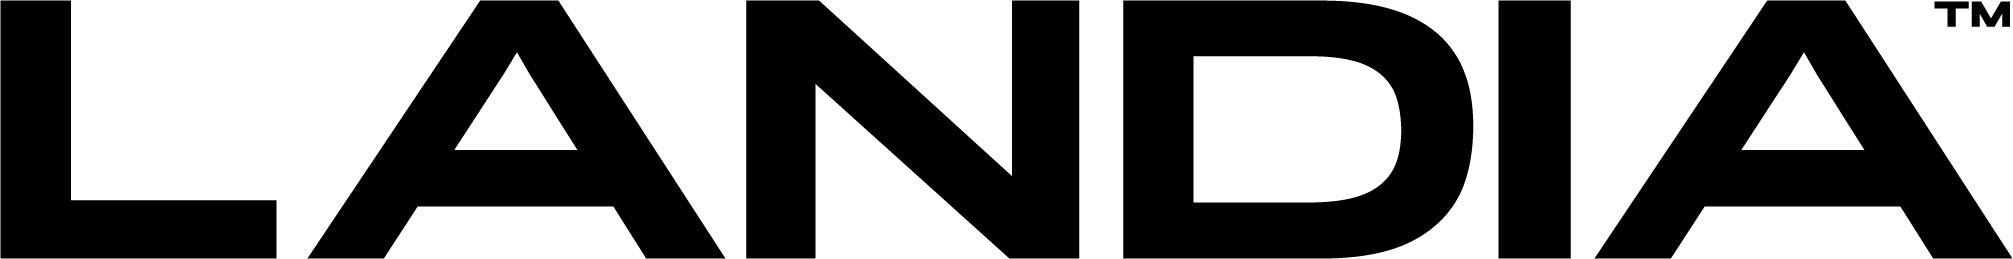 Logo Landia